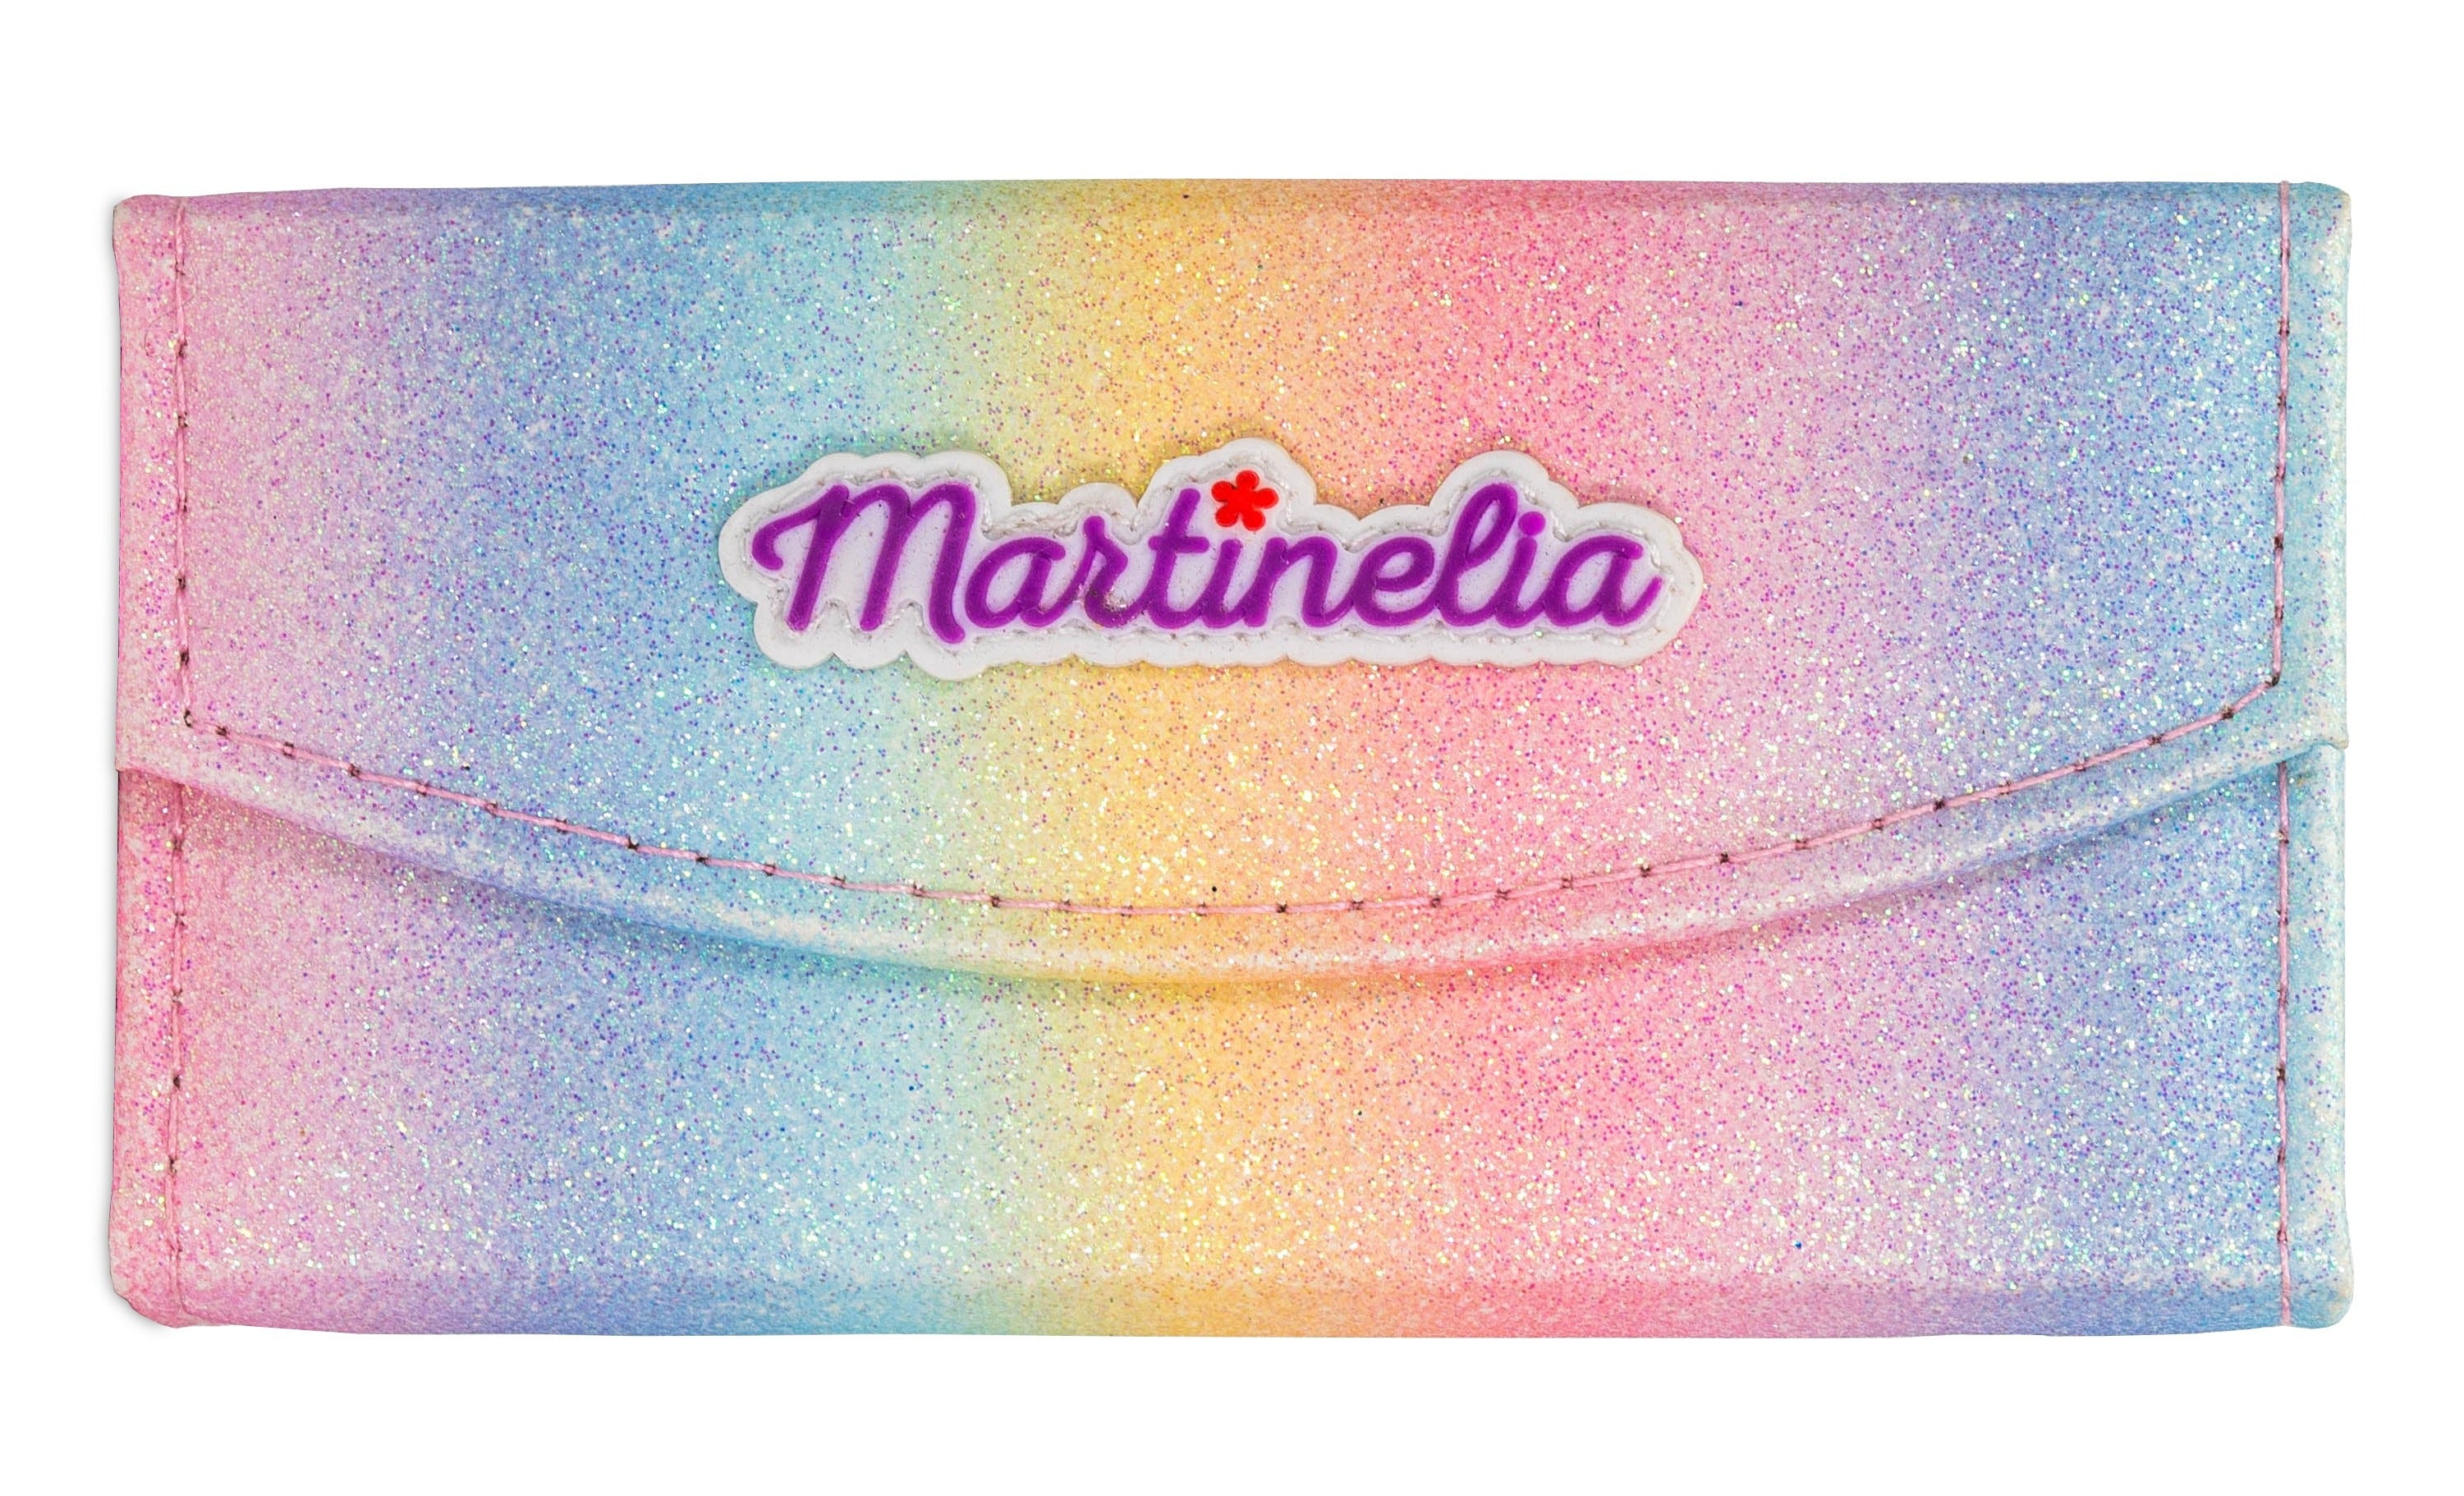 Martinelia Shimmer Paws Makeup Wallet